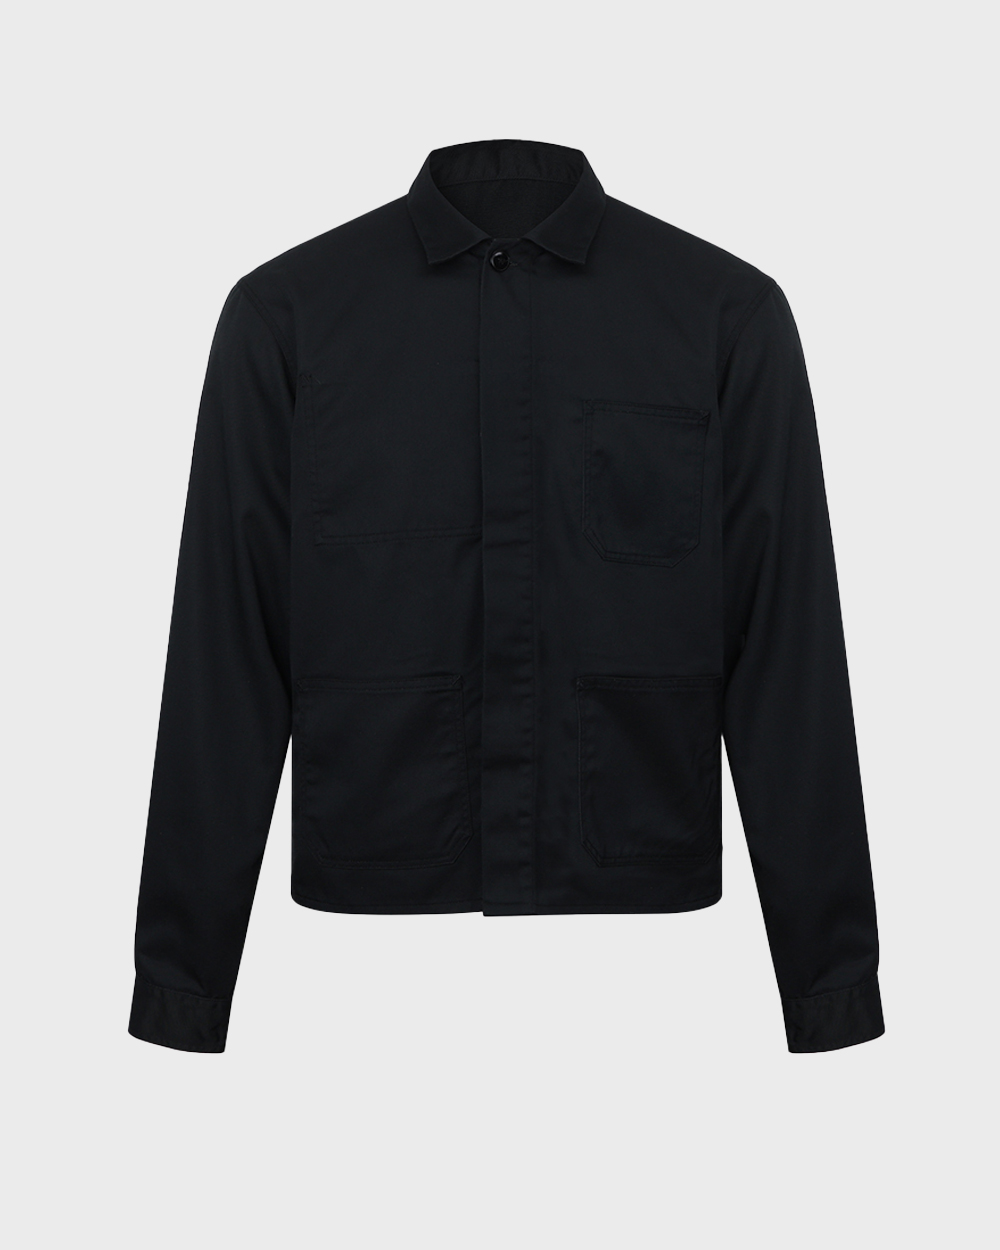 X French Work Jacket (Black)